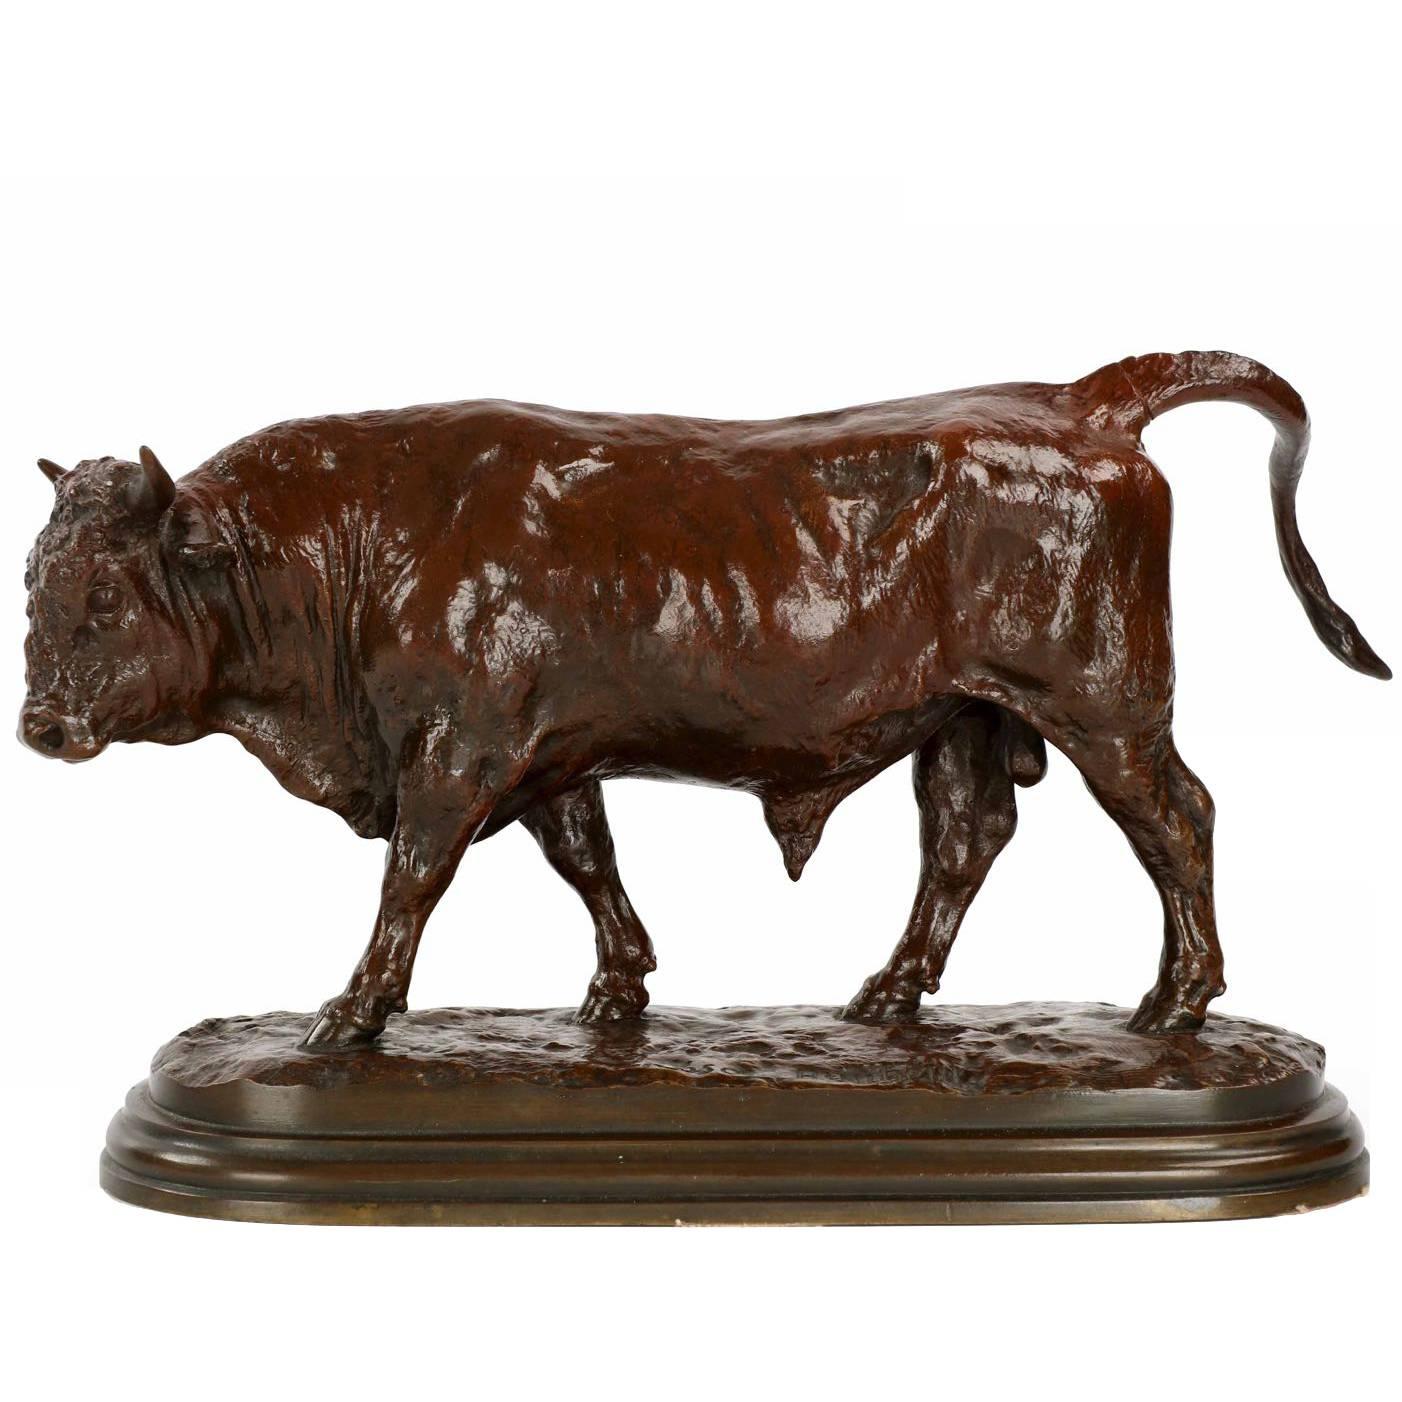 Rosa Bonheur Antique Bronze Bull Sculpture, "Taureau" circa 1860